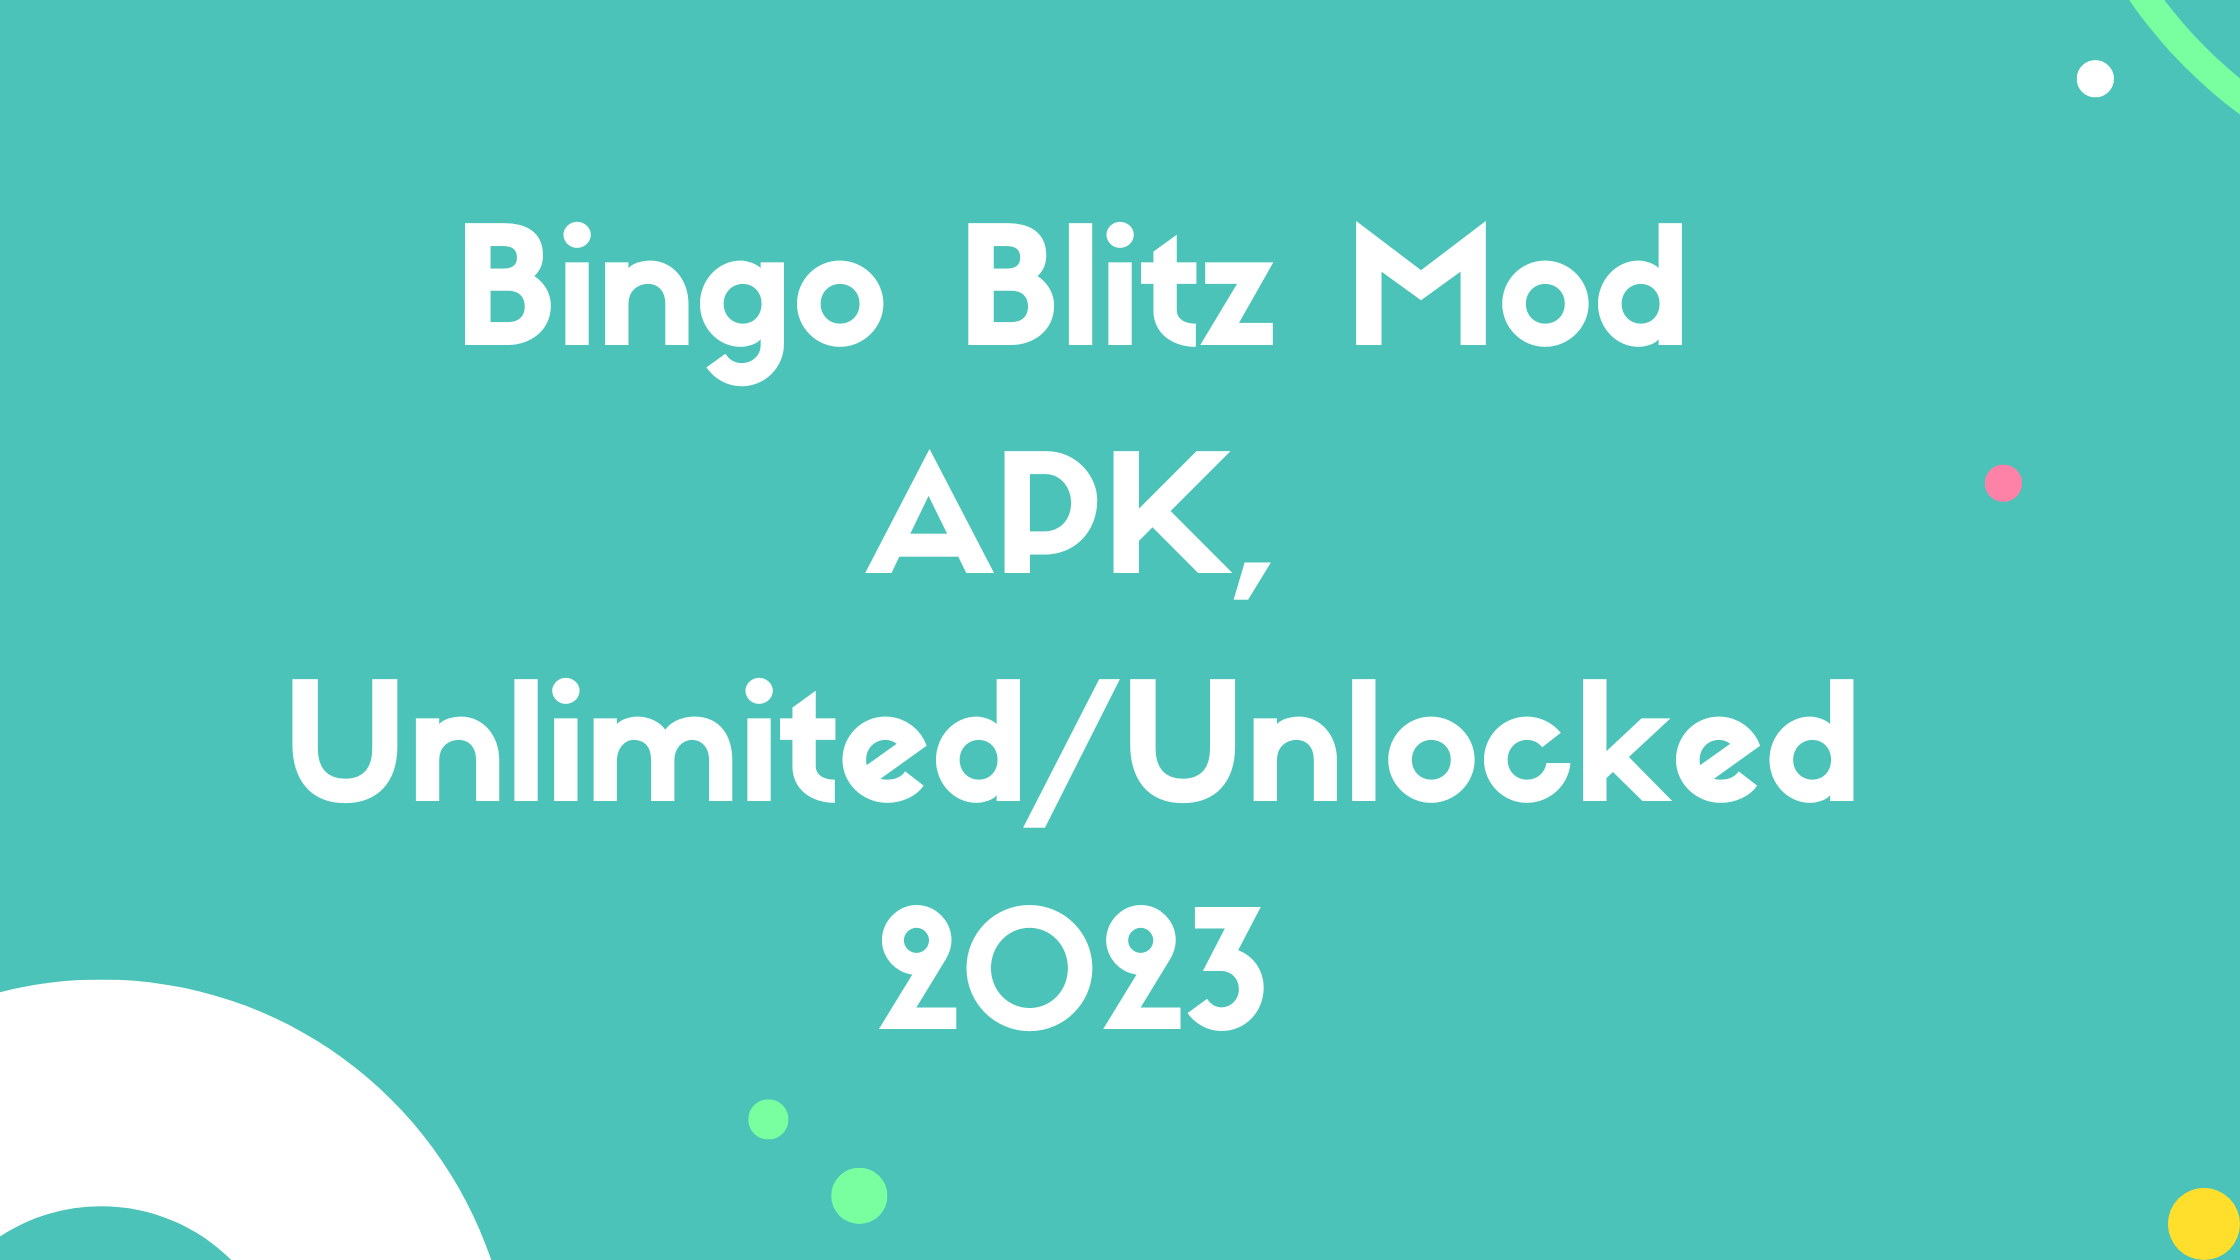 Bingo Blitz Mod APK, Unlimited/Unlocked 2023